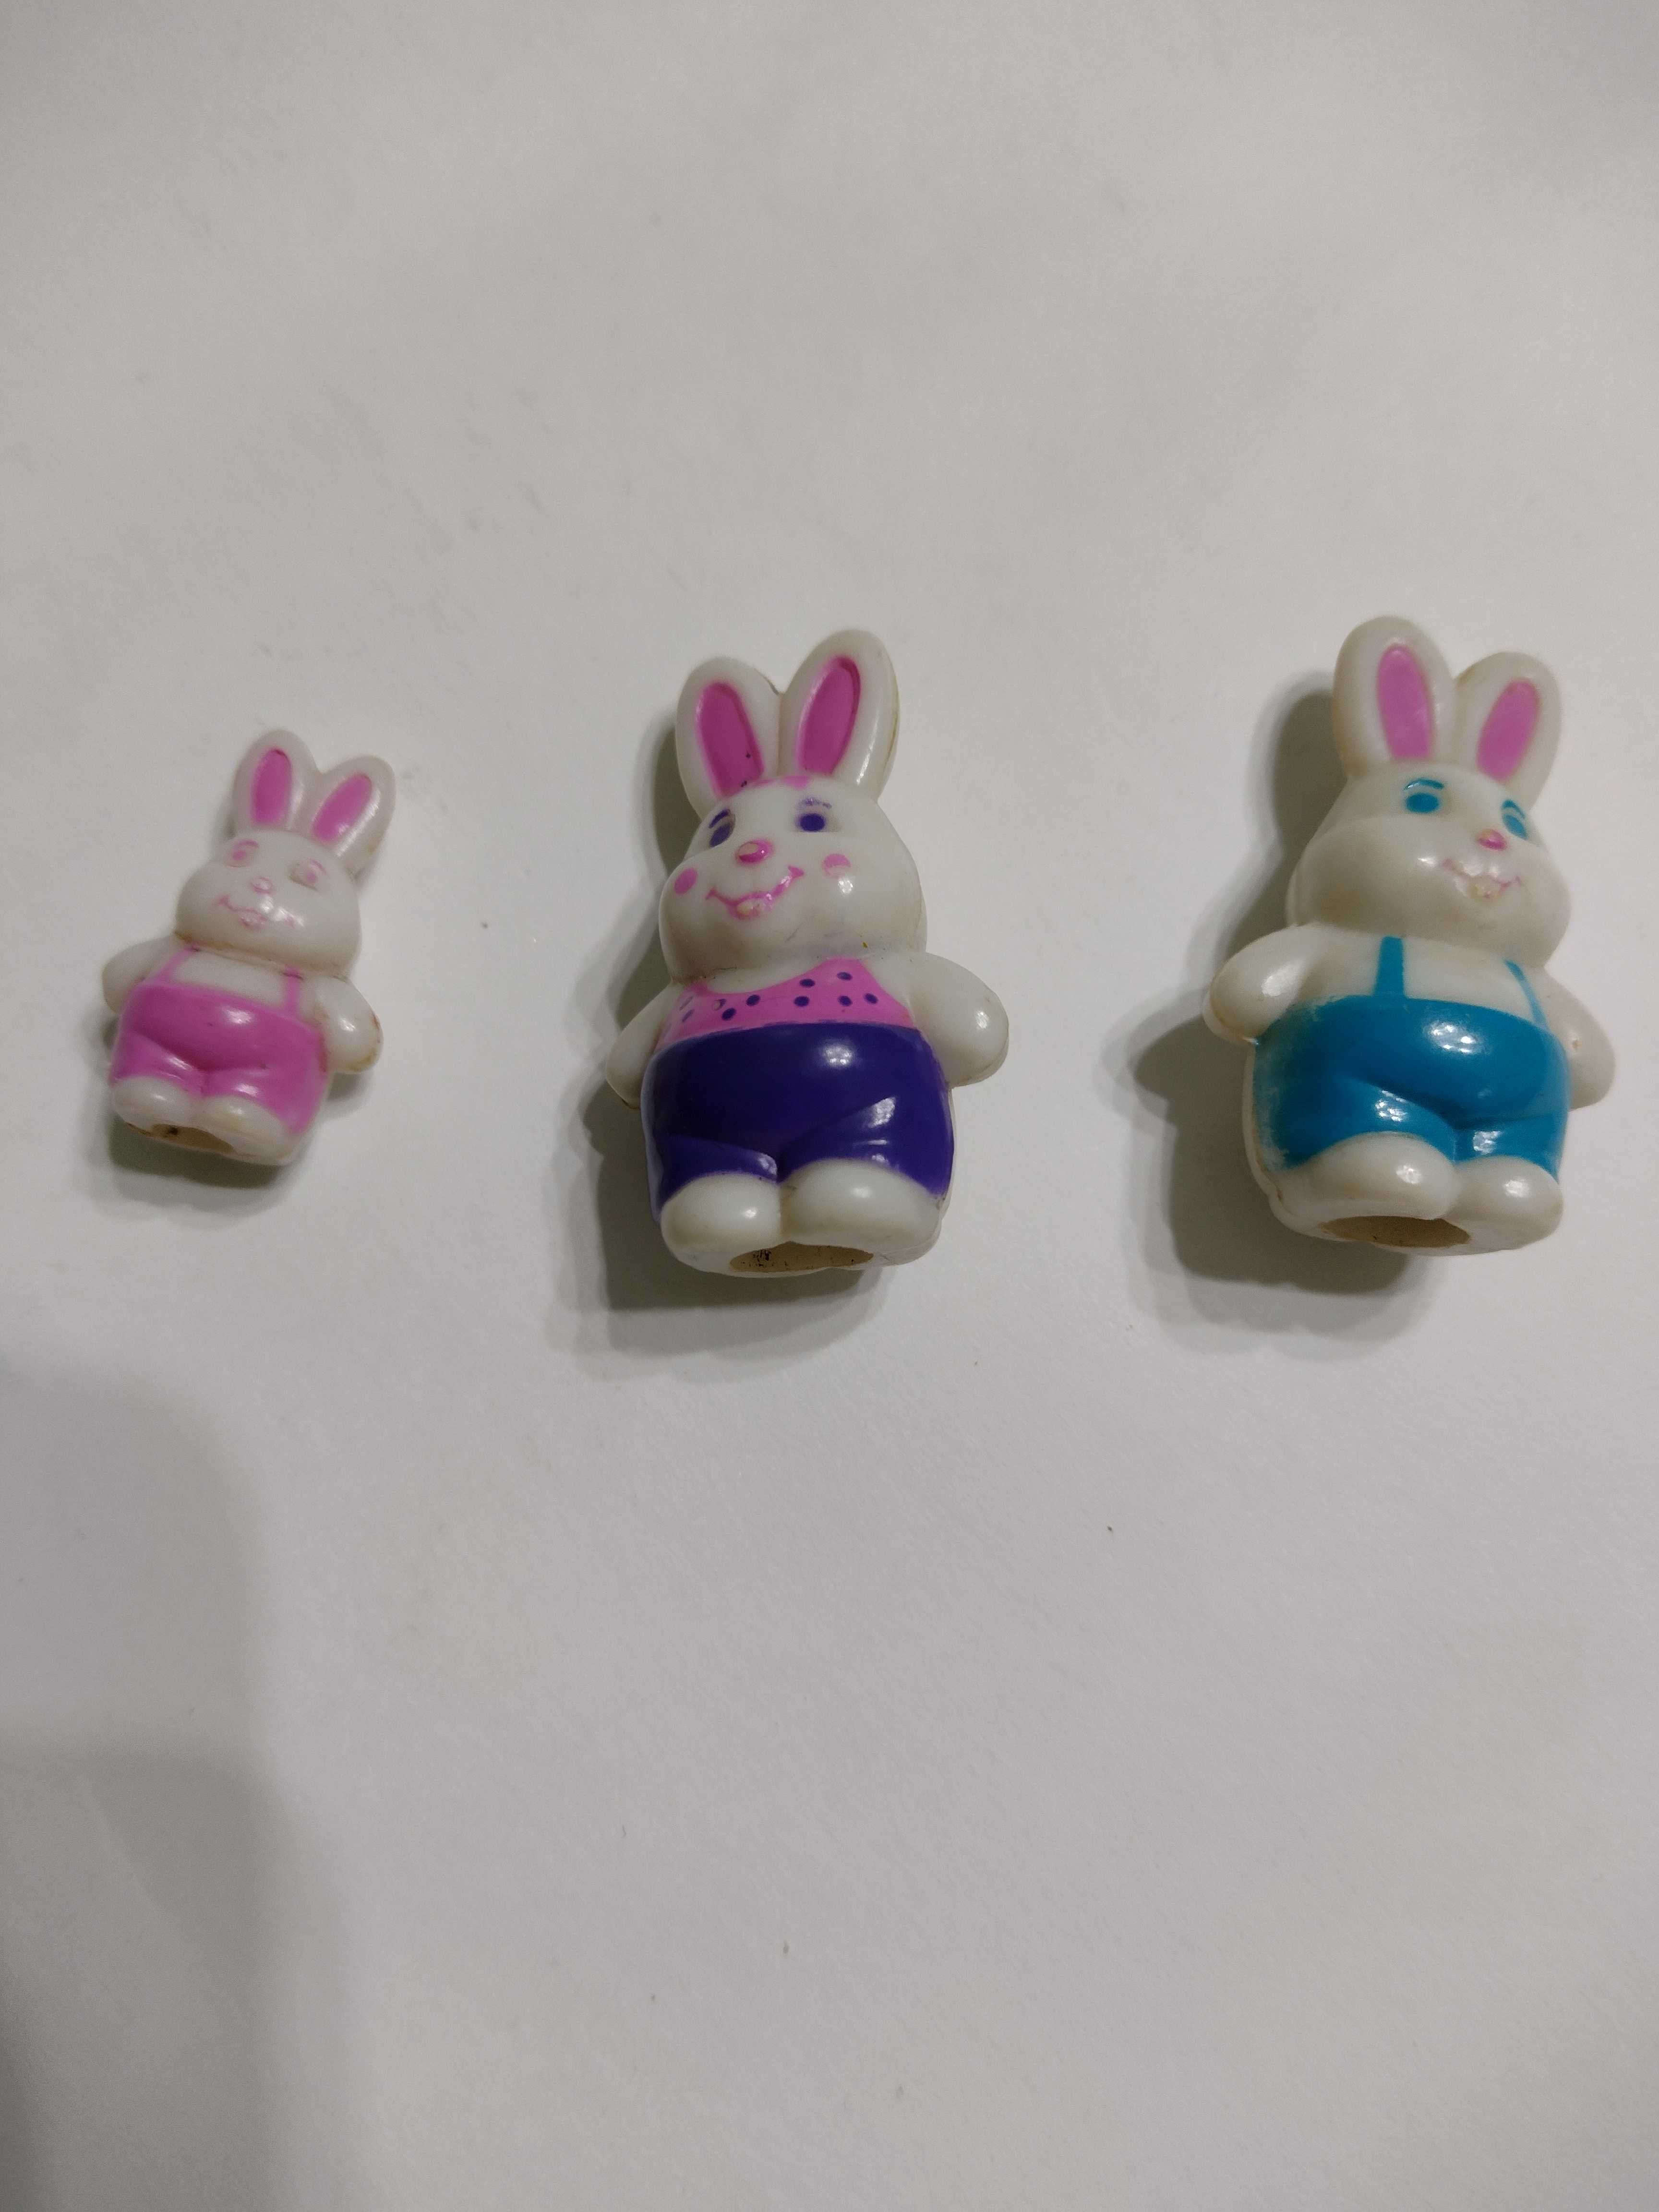 Figurka królik rodzina królików polly pocket 3 szt. lata 90-te